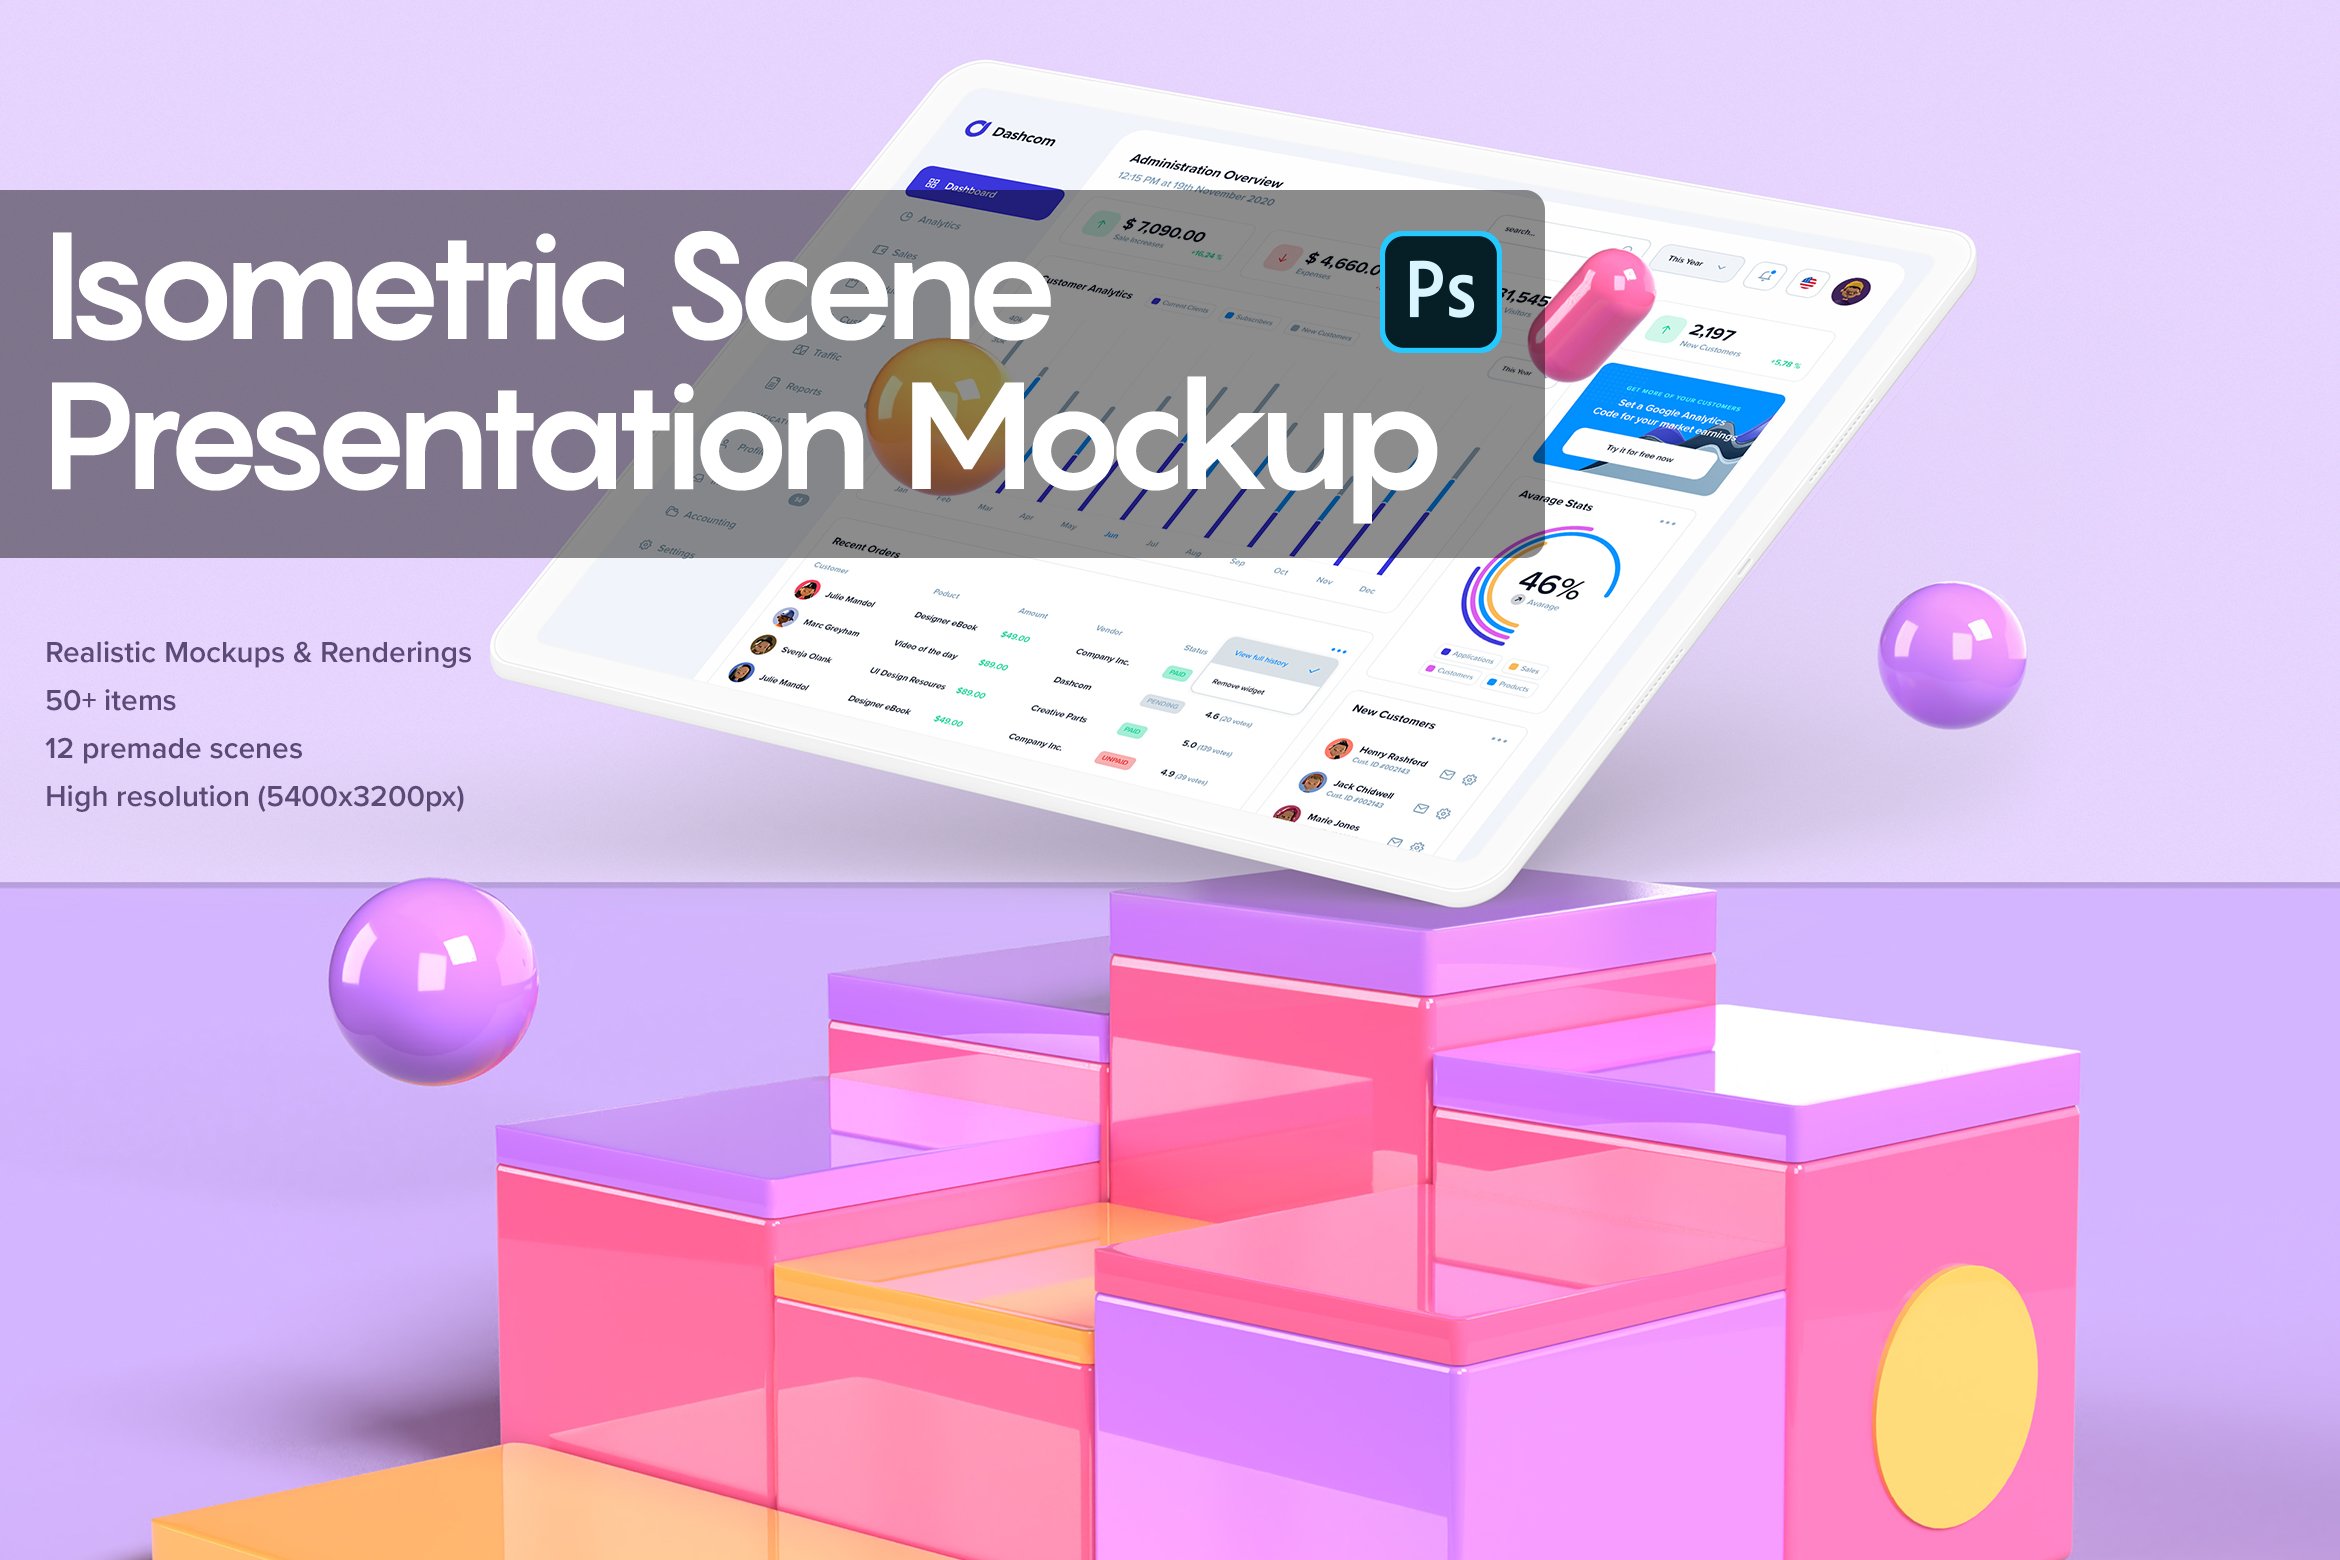 Isometric Scene Presentation Mockup cover image.